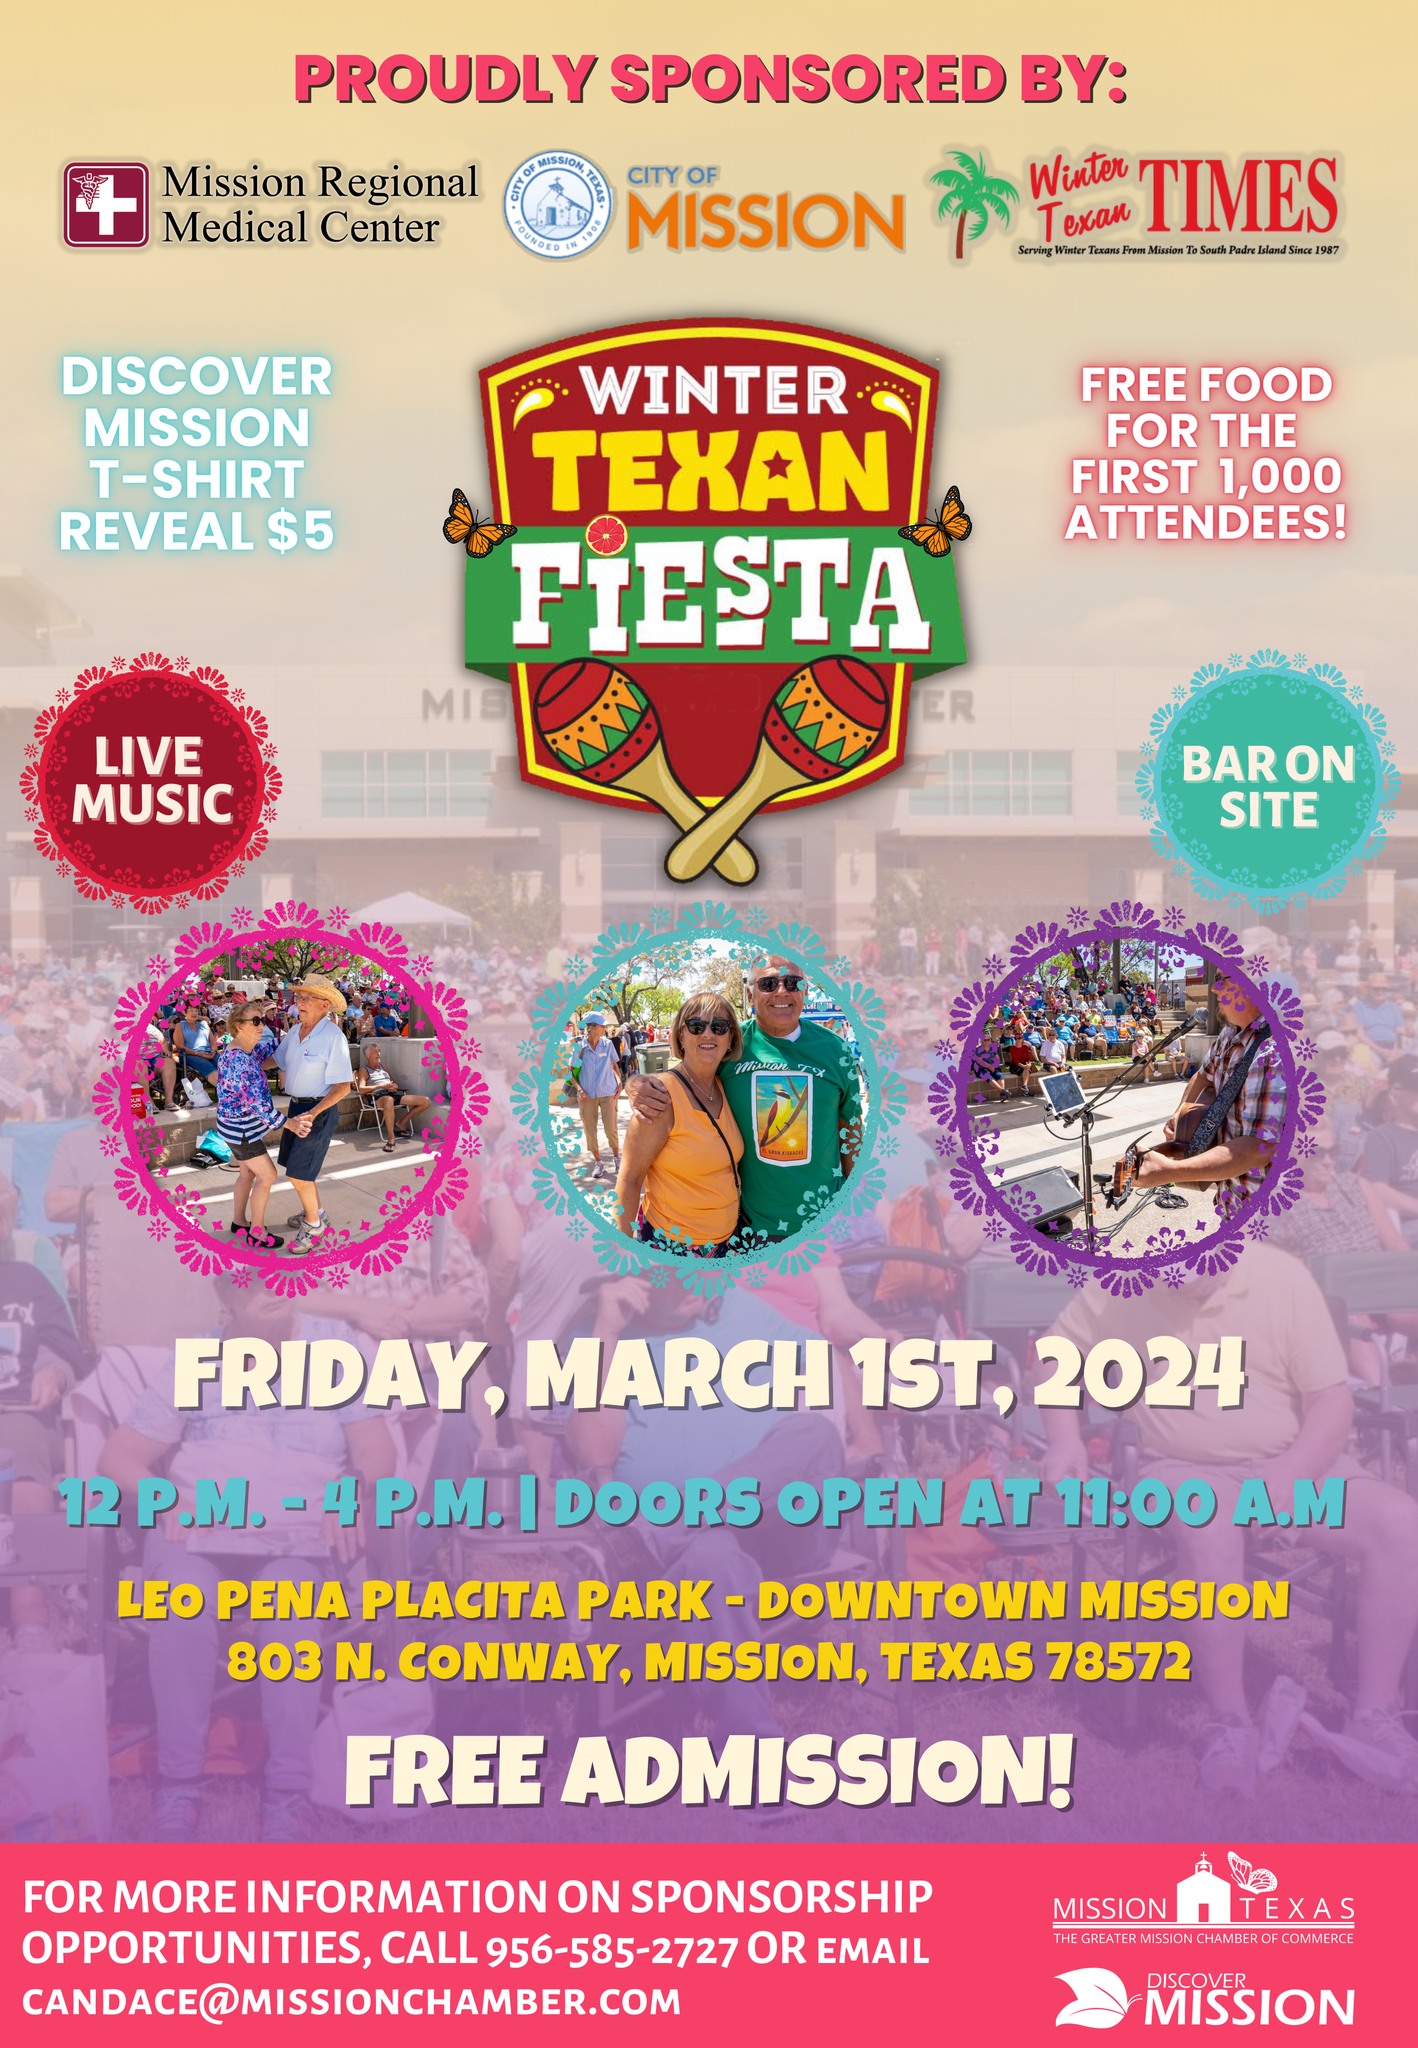 Ultimate Winter Texan Fiesta experience!